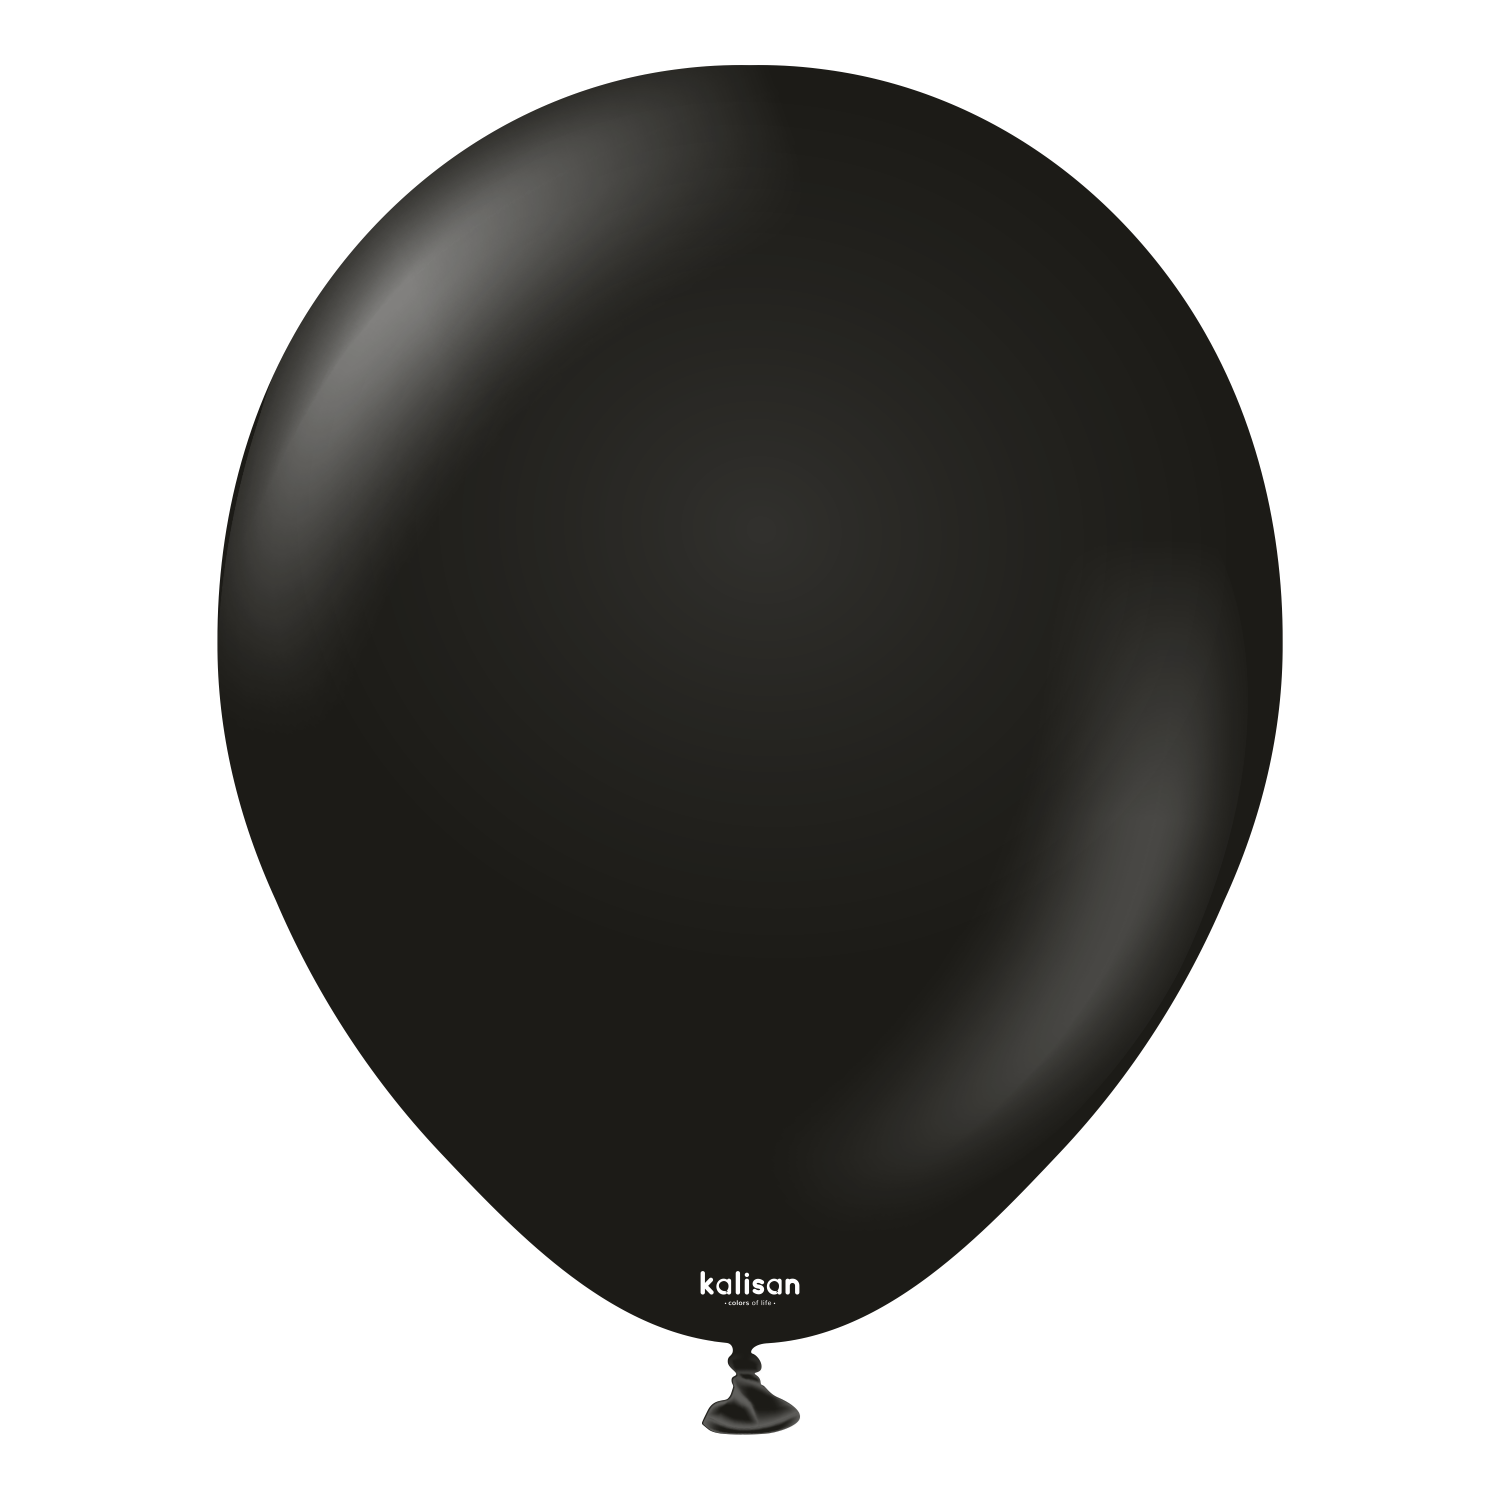 Premium lateksballong Kalisan i svart  farge